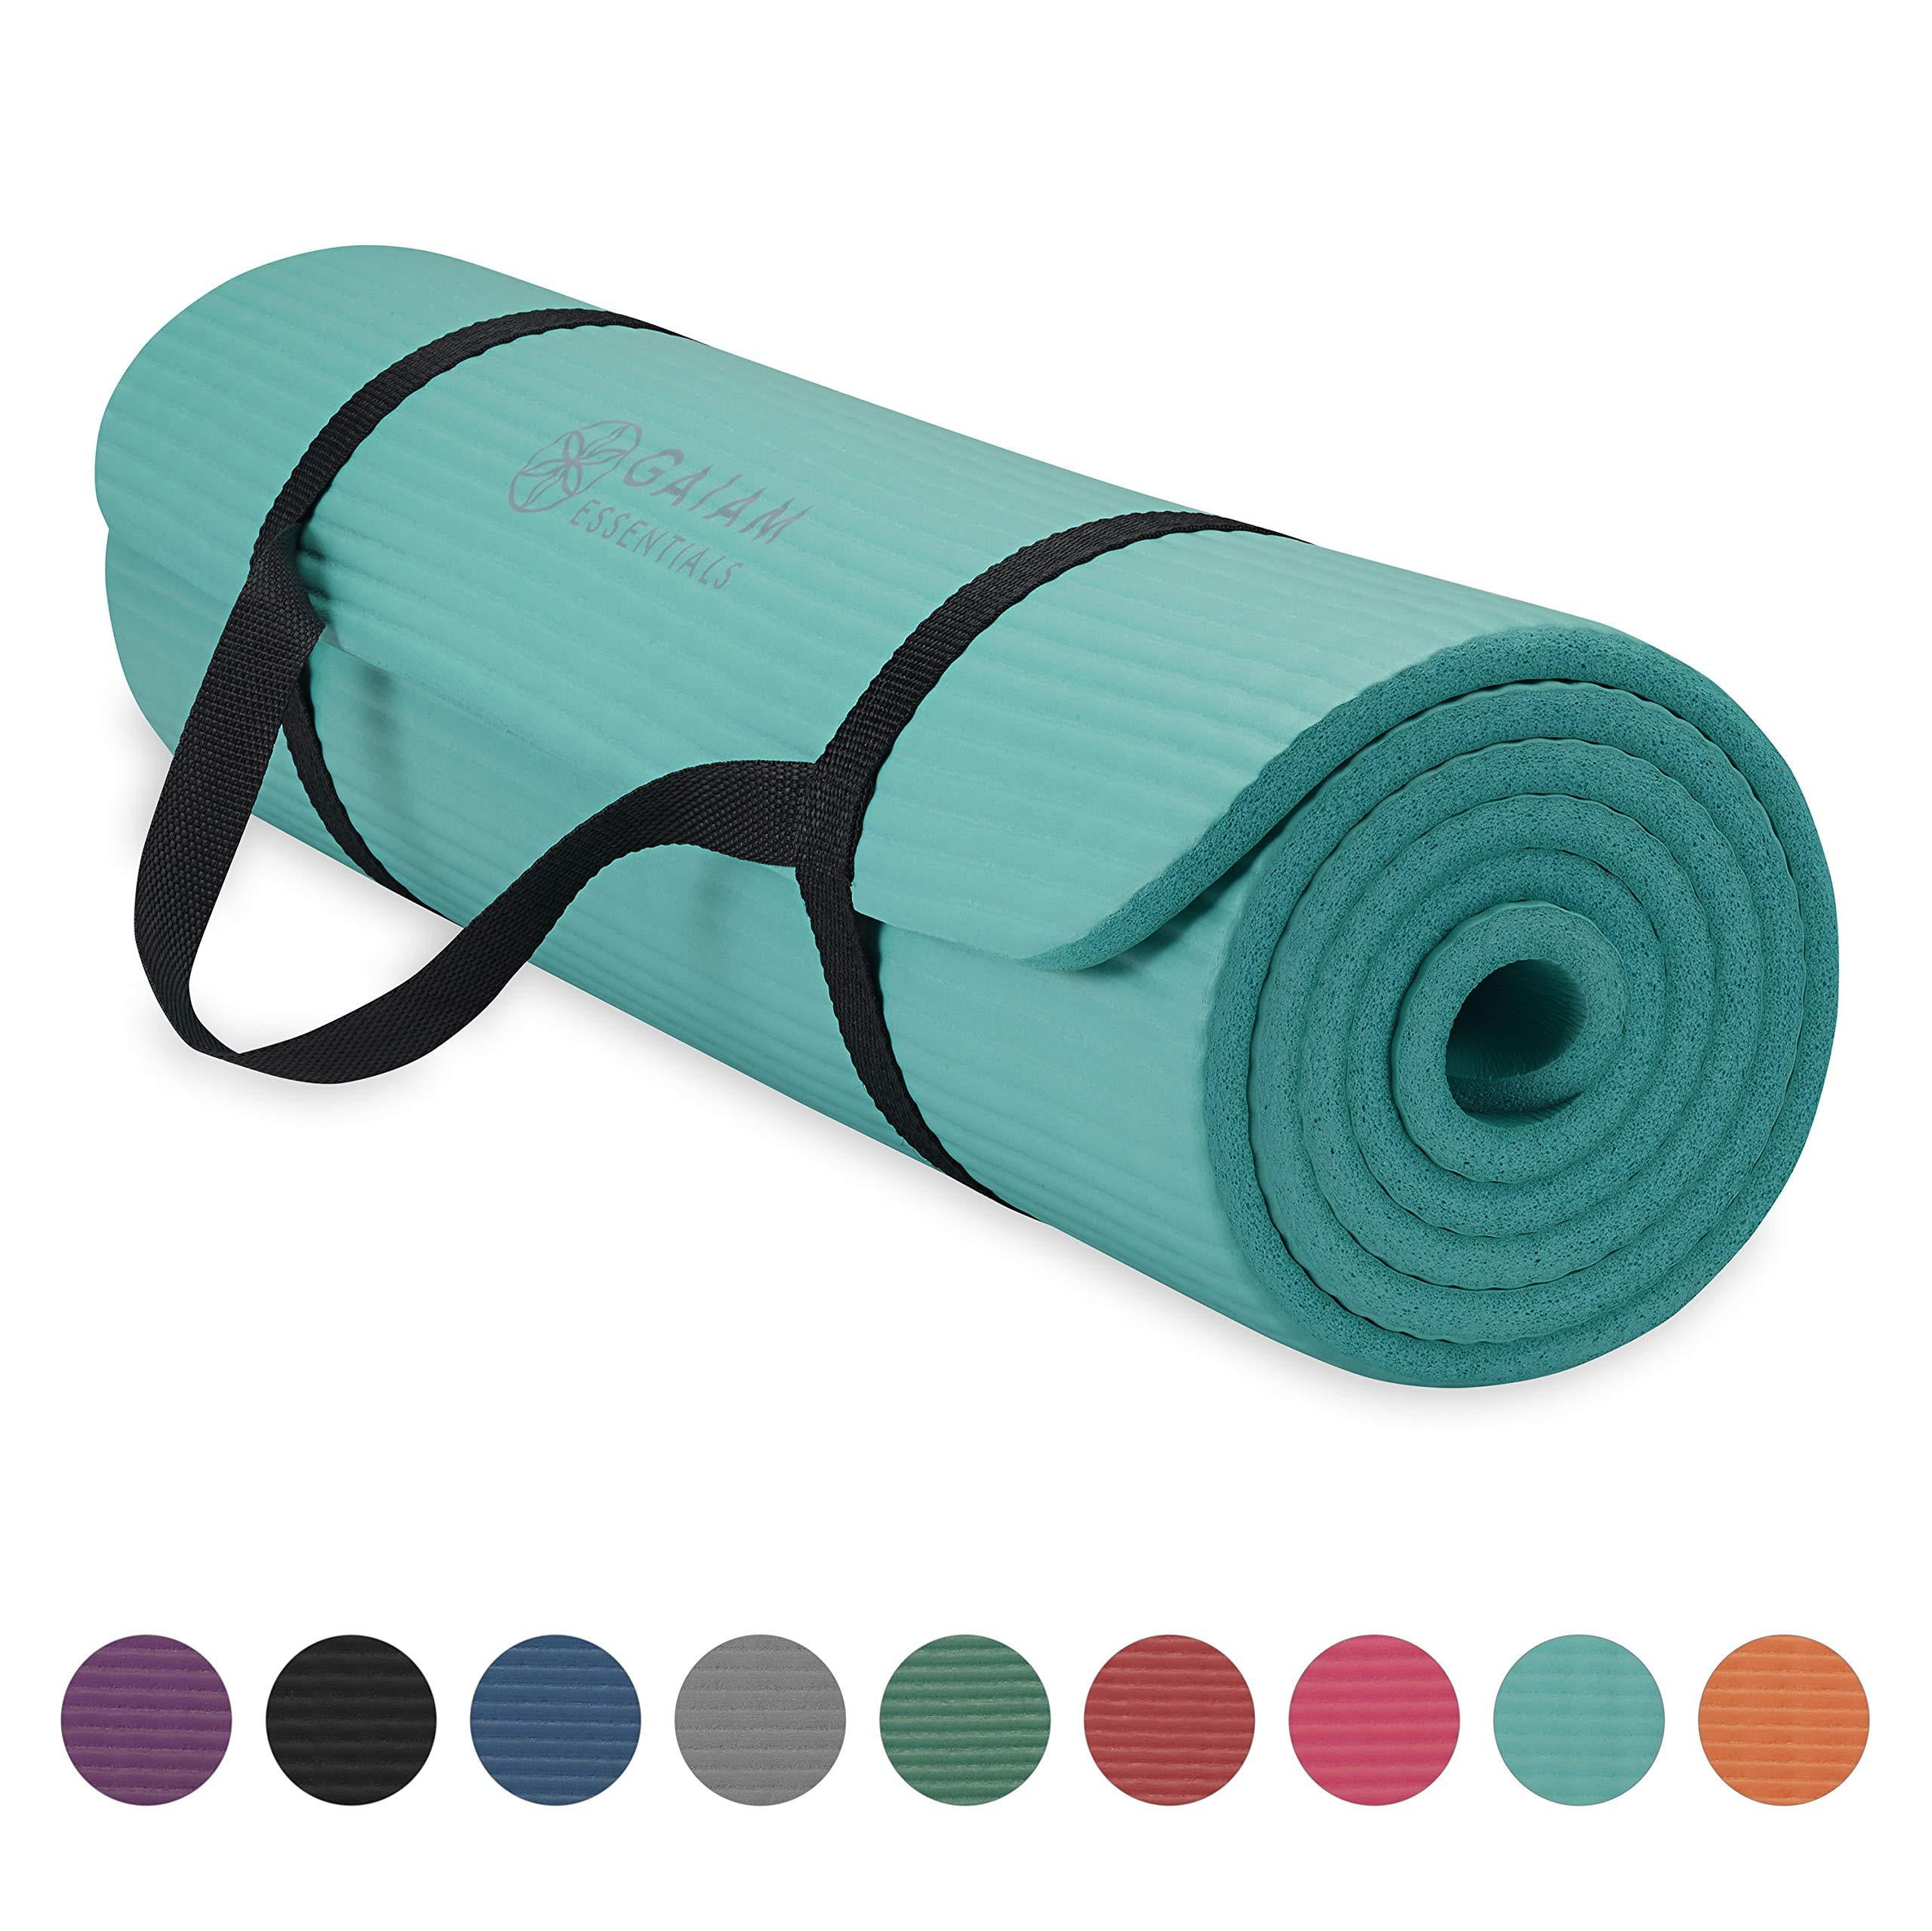 Colour options available Gaiam Yoga Mat